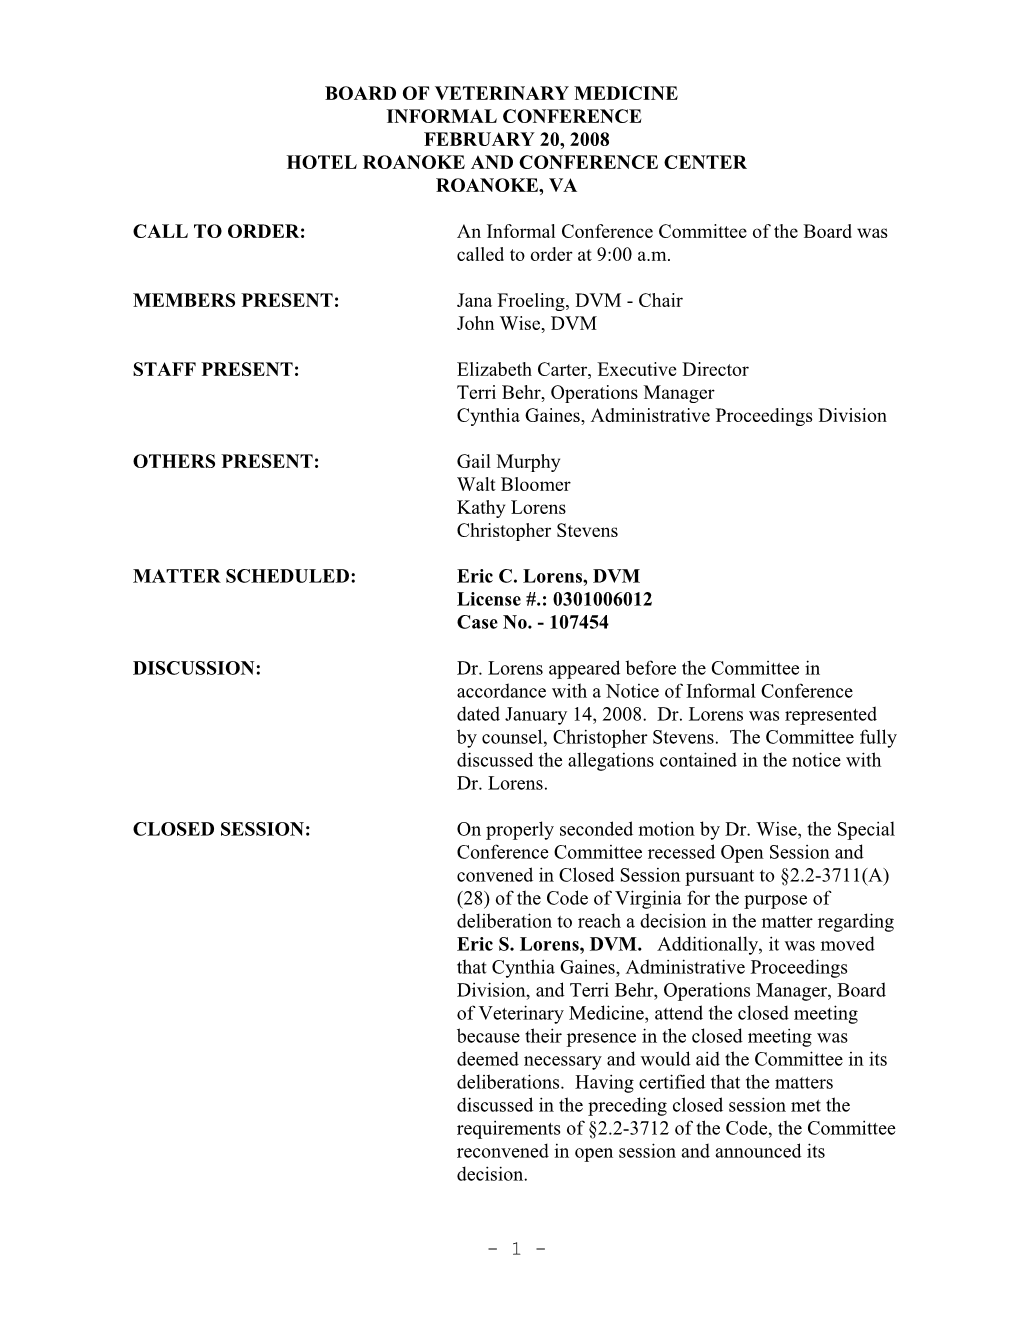 Board of Veterinary Medicine IFC Minutes 02-20-2008